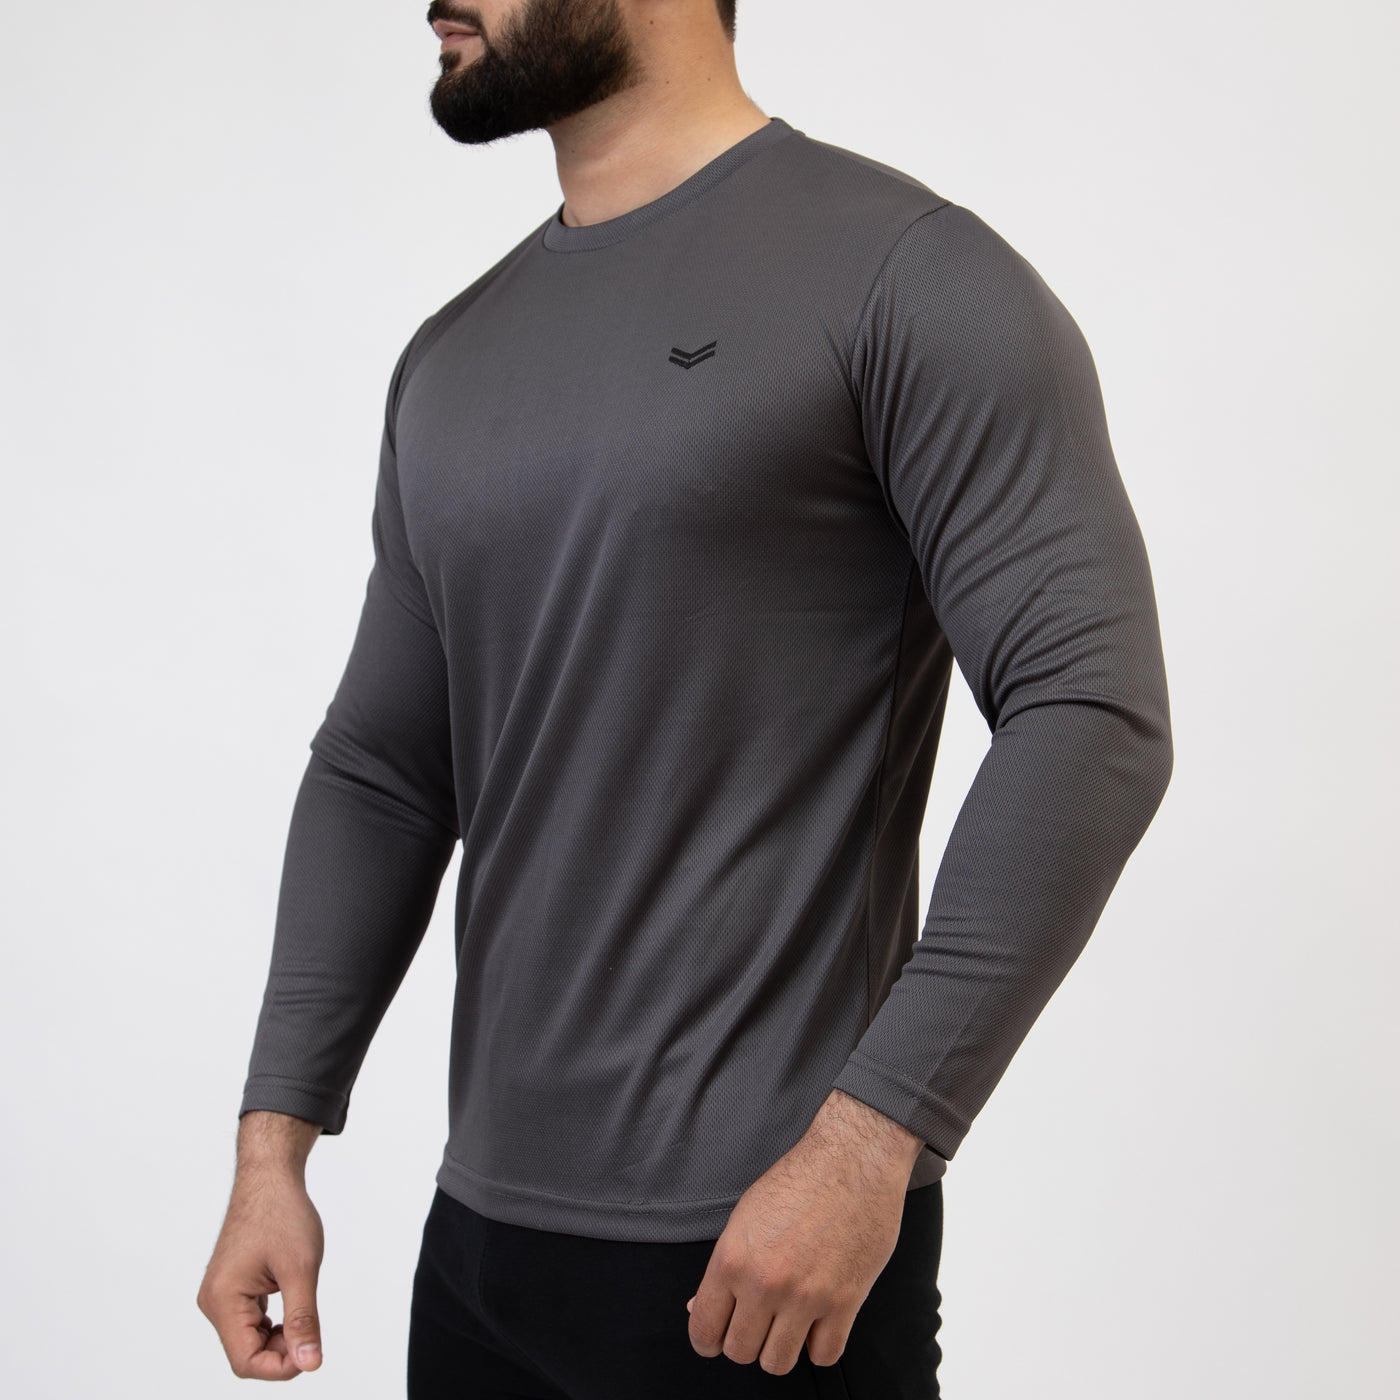 Gray Mesh Full Sleeves T-Shirt with Back Black Panel